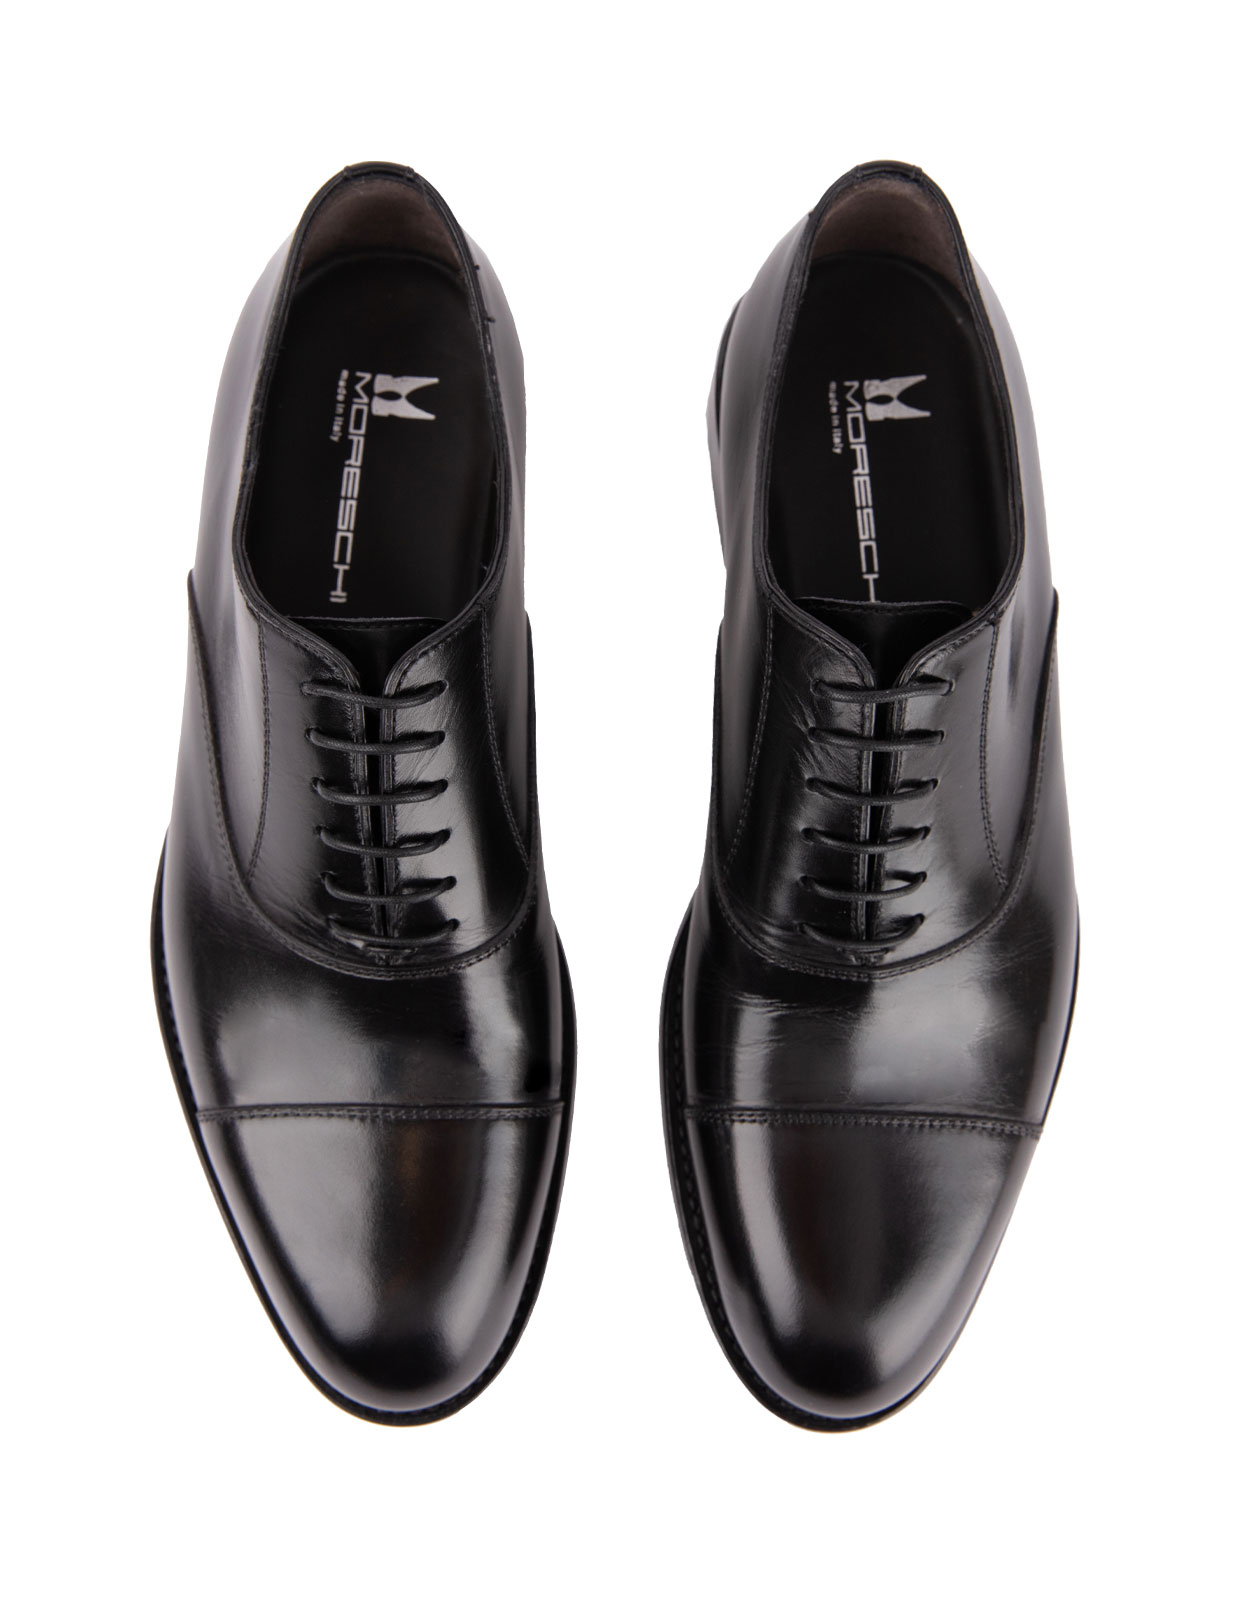 New York Oxford Shoes Calfskin Black Stl 11